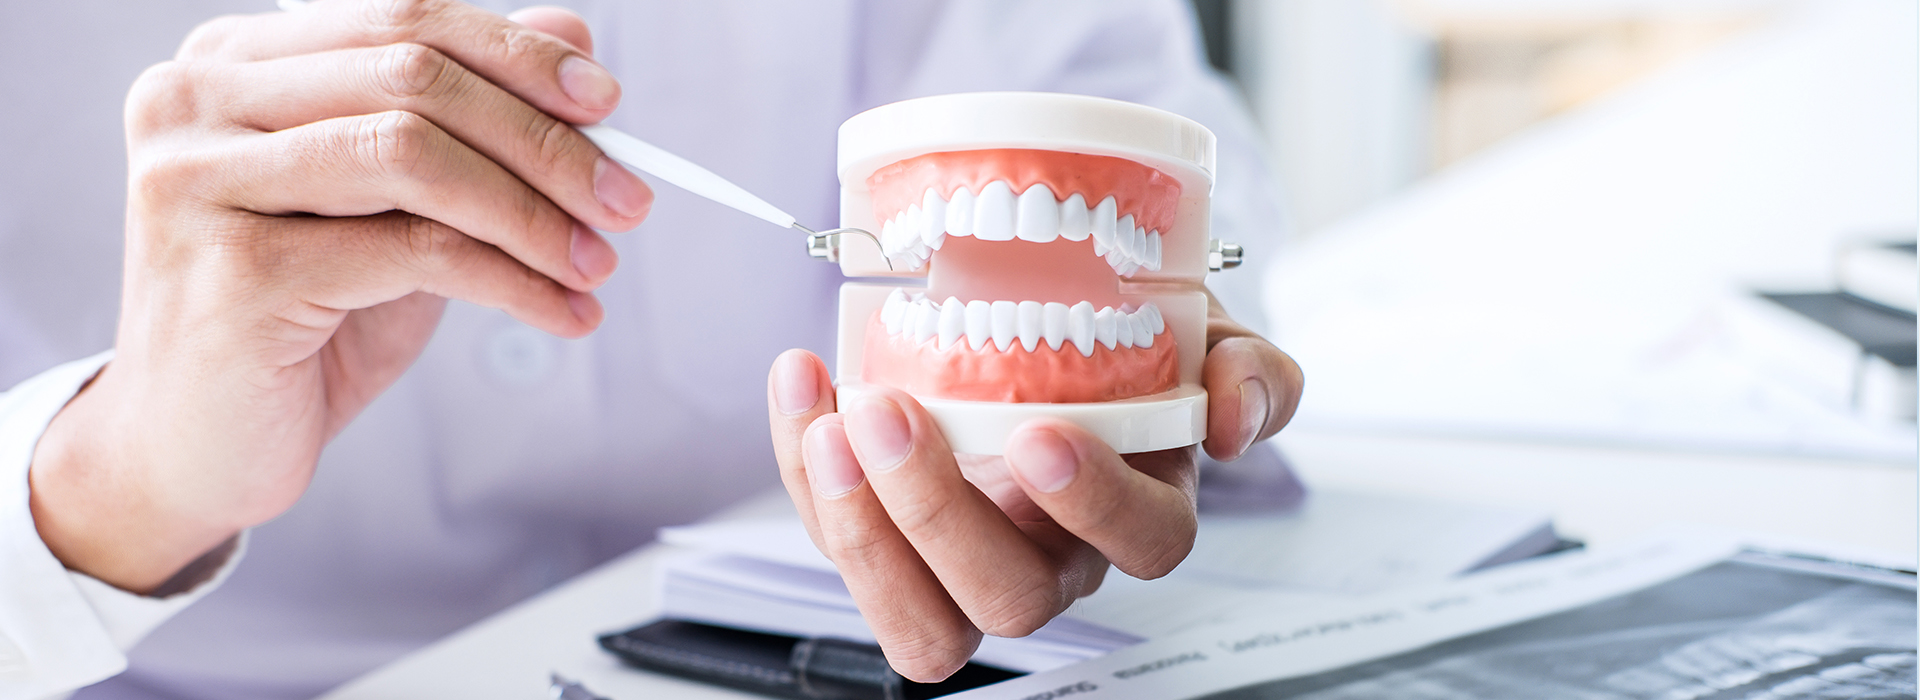 HP Dental | Implant Restorations, Ceramic Crowns and Digital Radiography